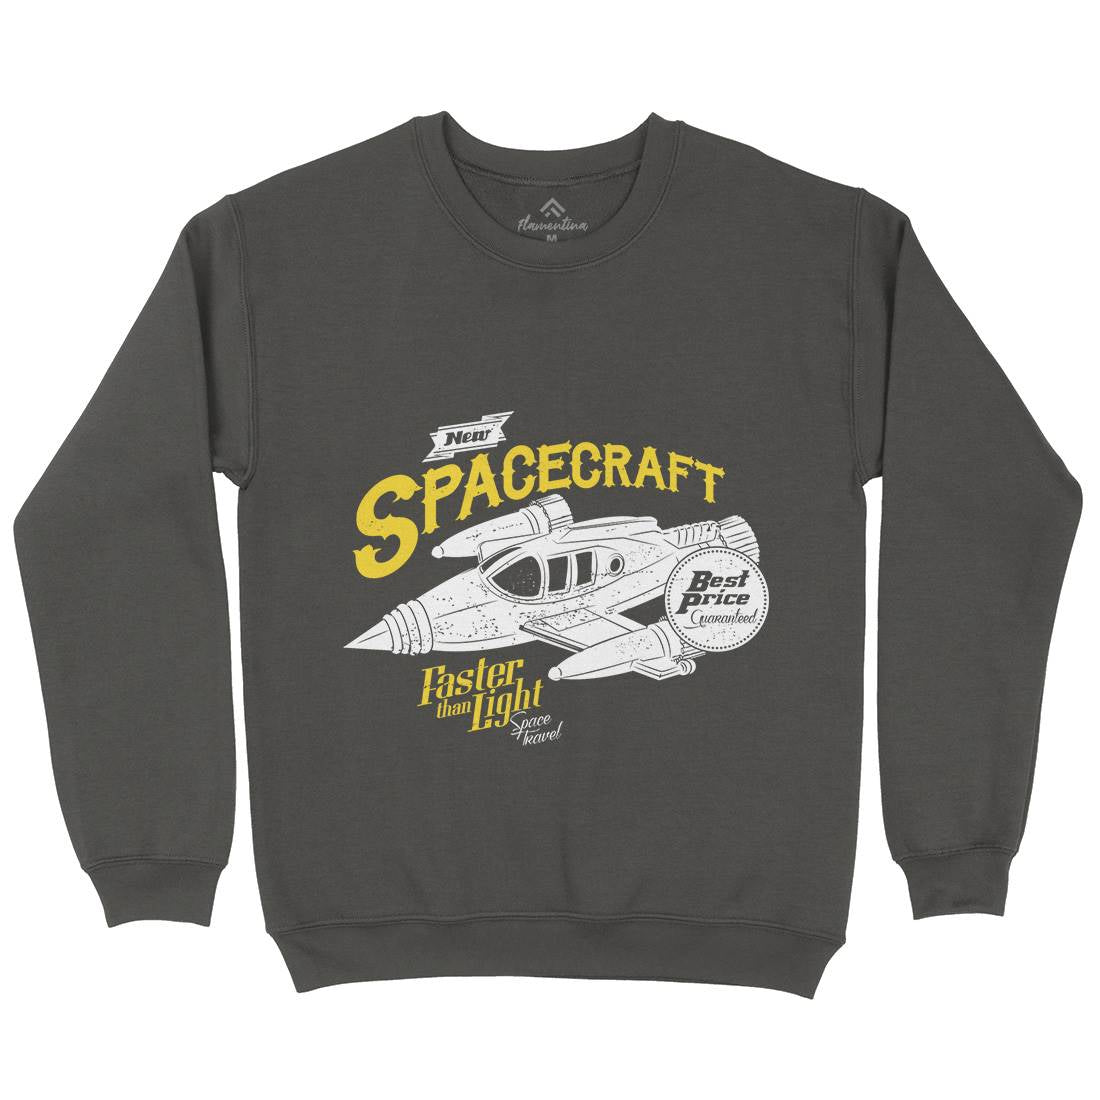 Spacecraft Kids Crew Neck Sweatshirt Space A958